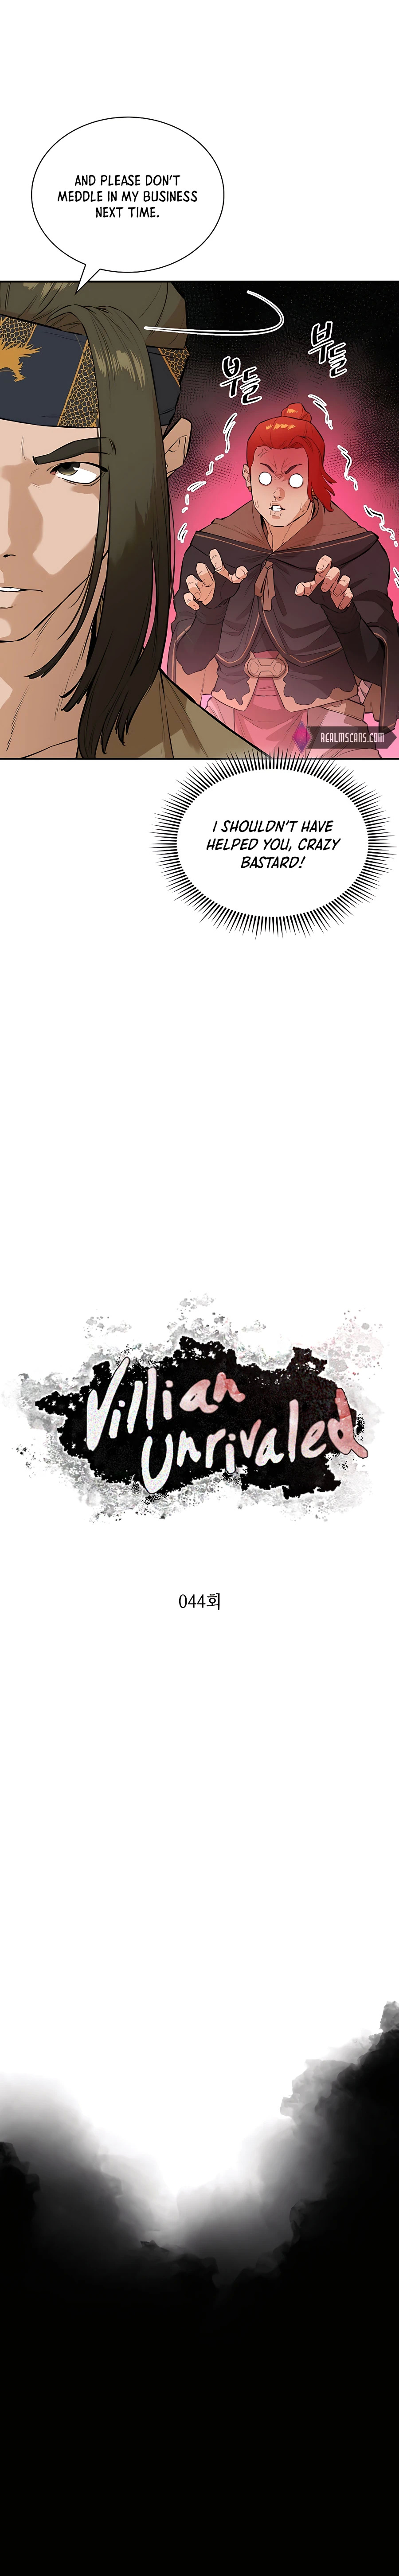 Villain Unrivaled 44